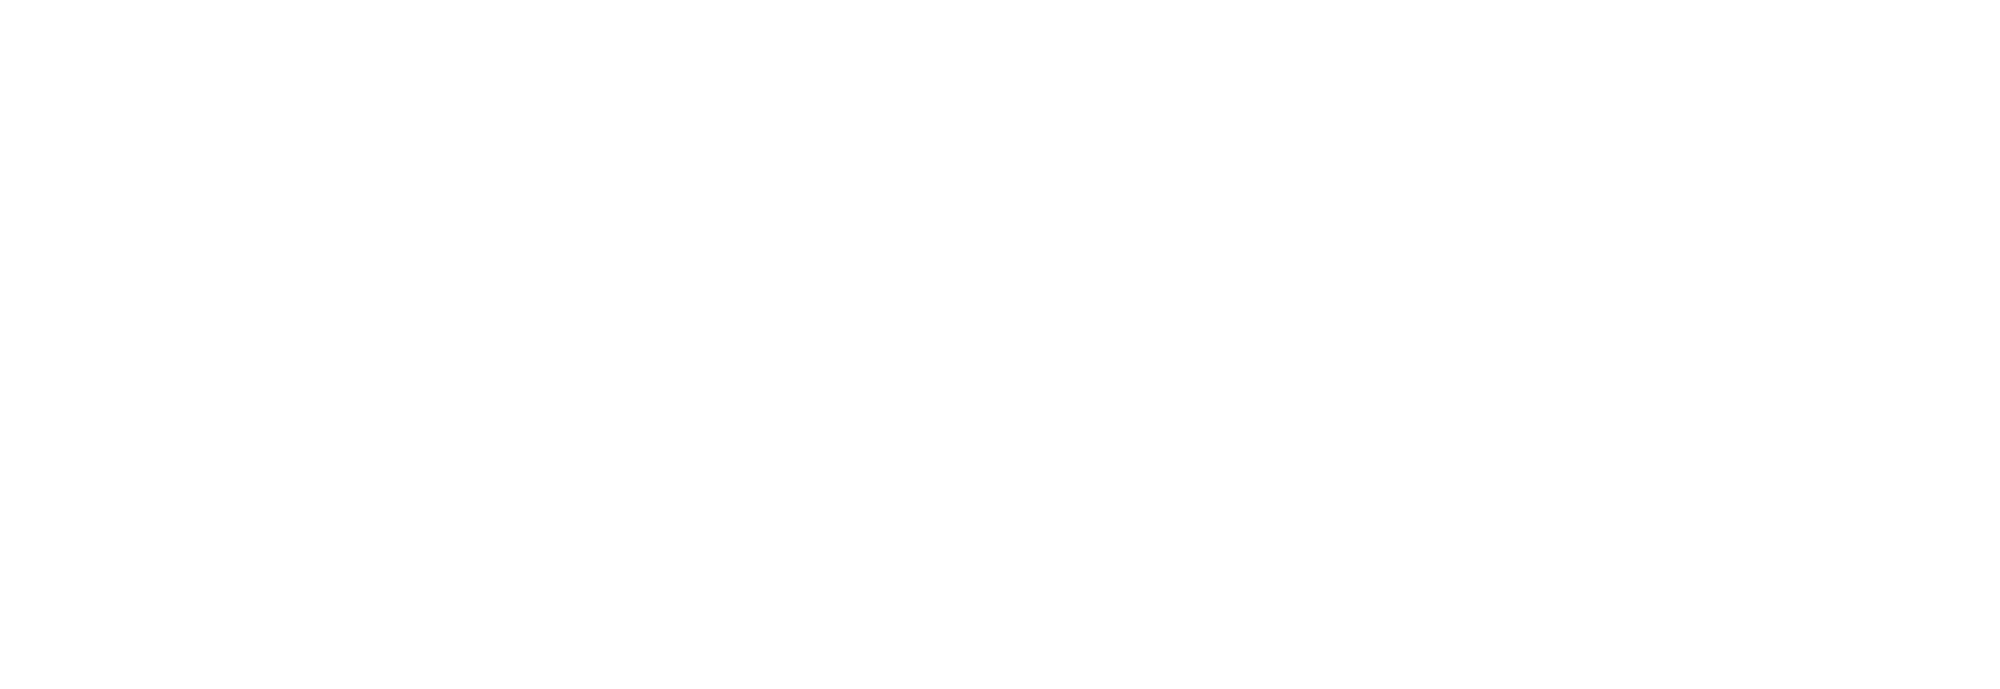 Emporia, épicerie de terroirs